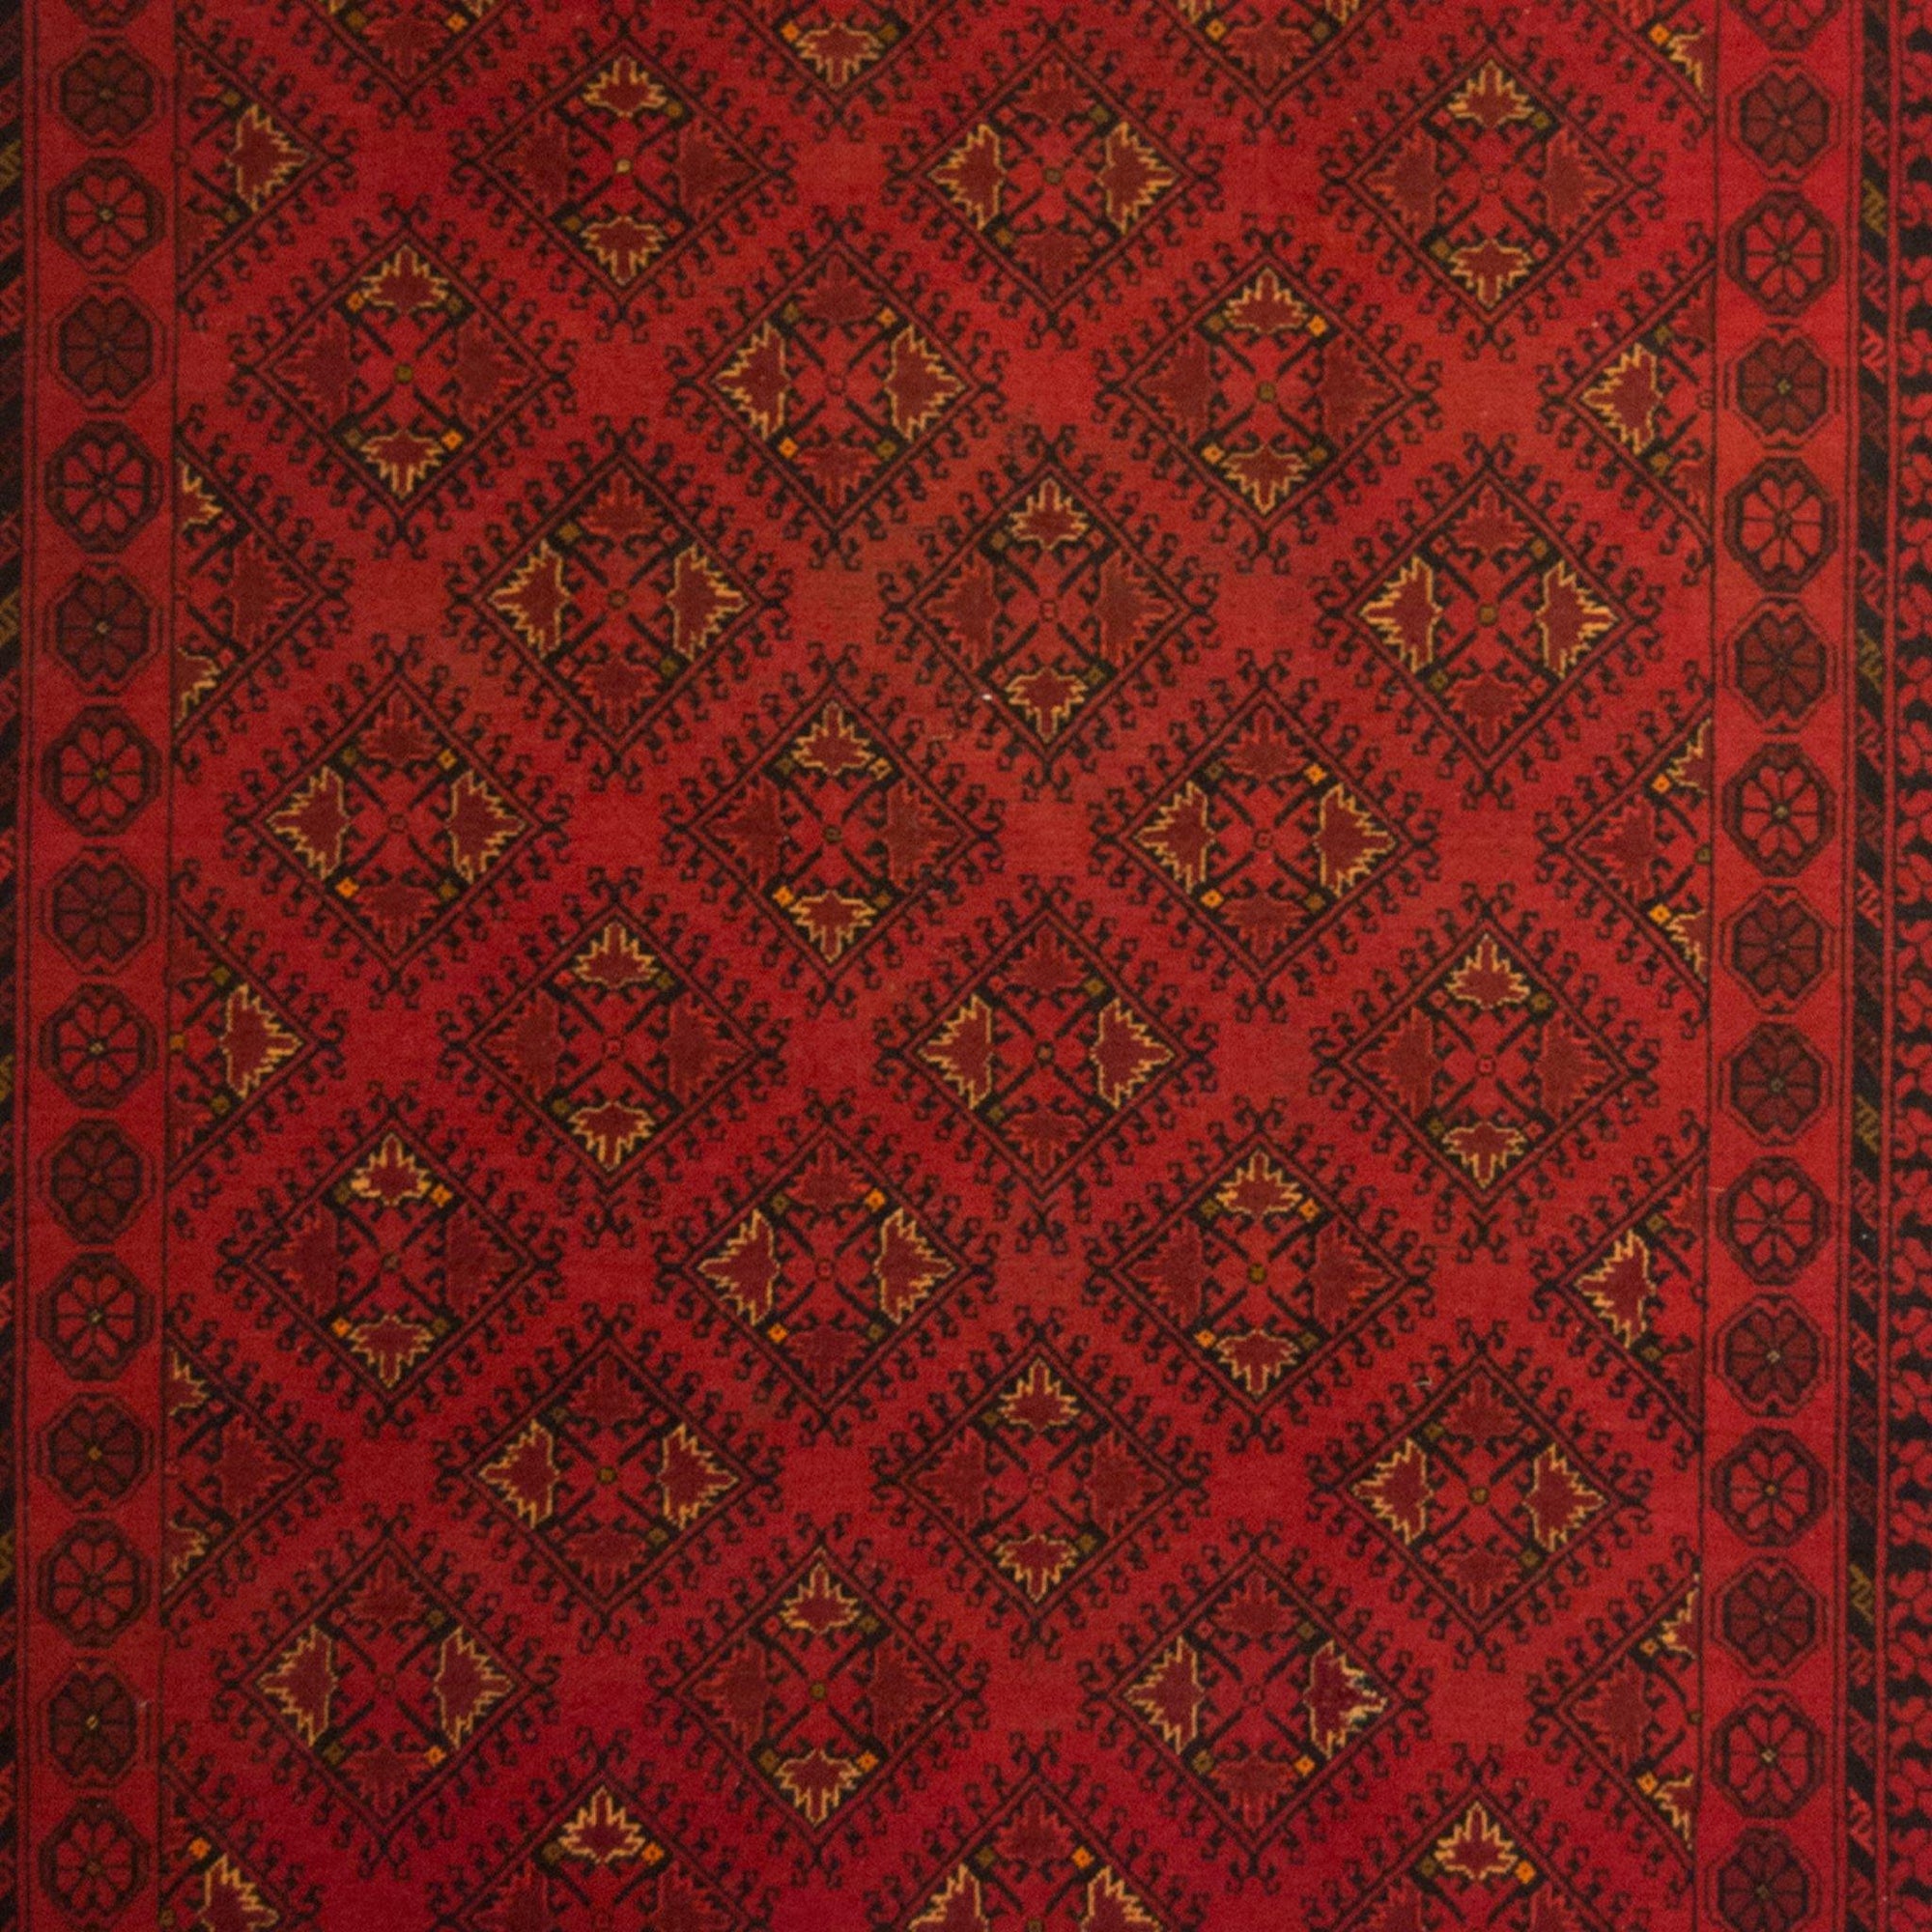 Fine Hand-knotted Wool Afghan Turkmen Rug 144cm x 241cm